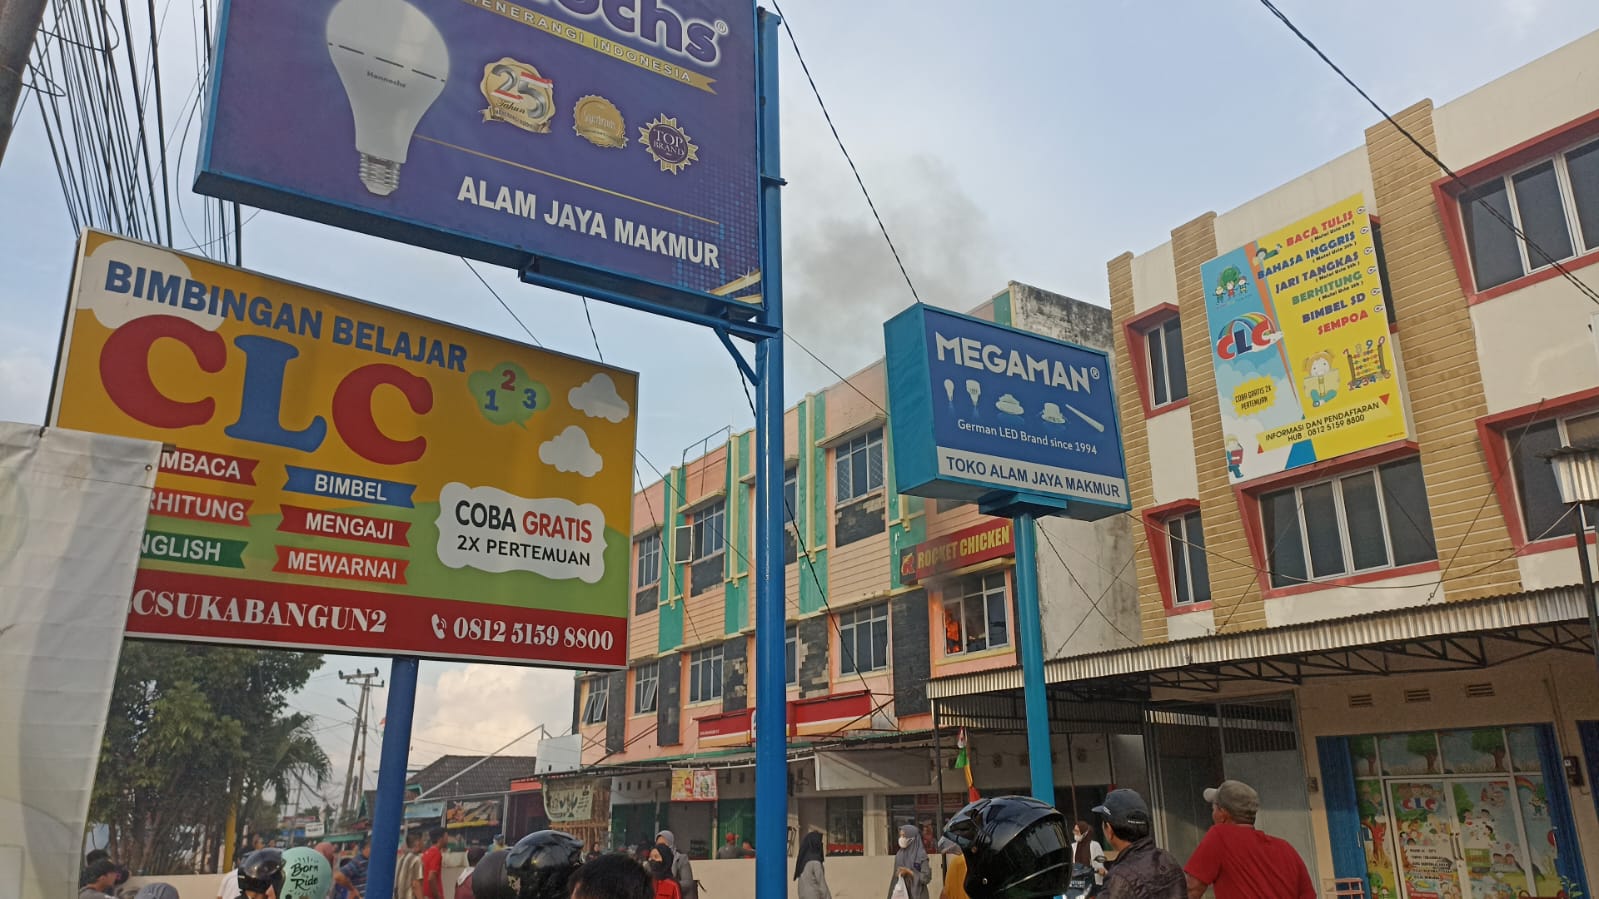 Ruko Rumah Makan Cepat Saji di Jalan Sukabangun II Terbakar